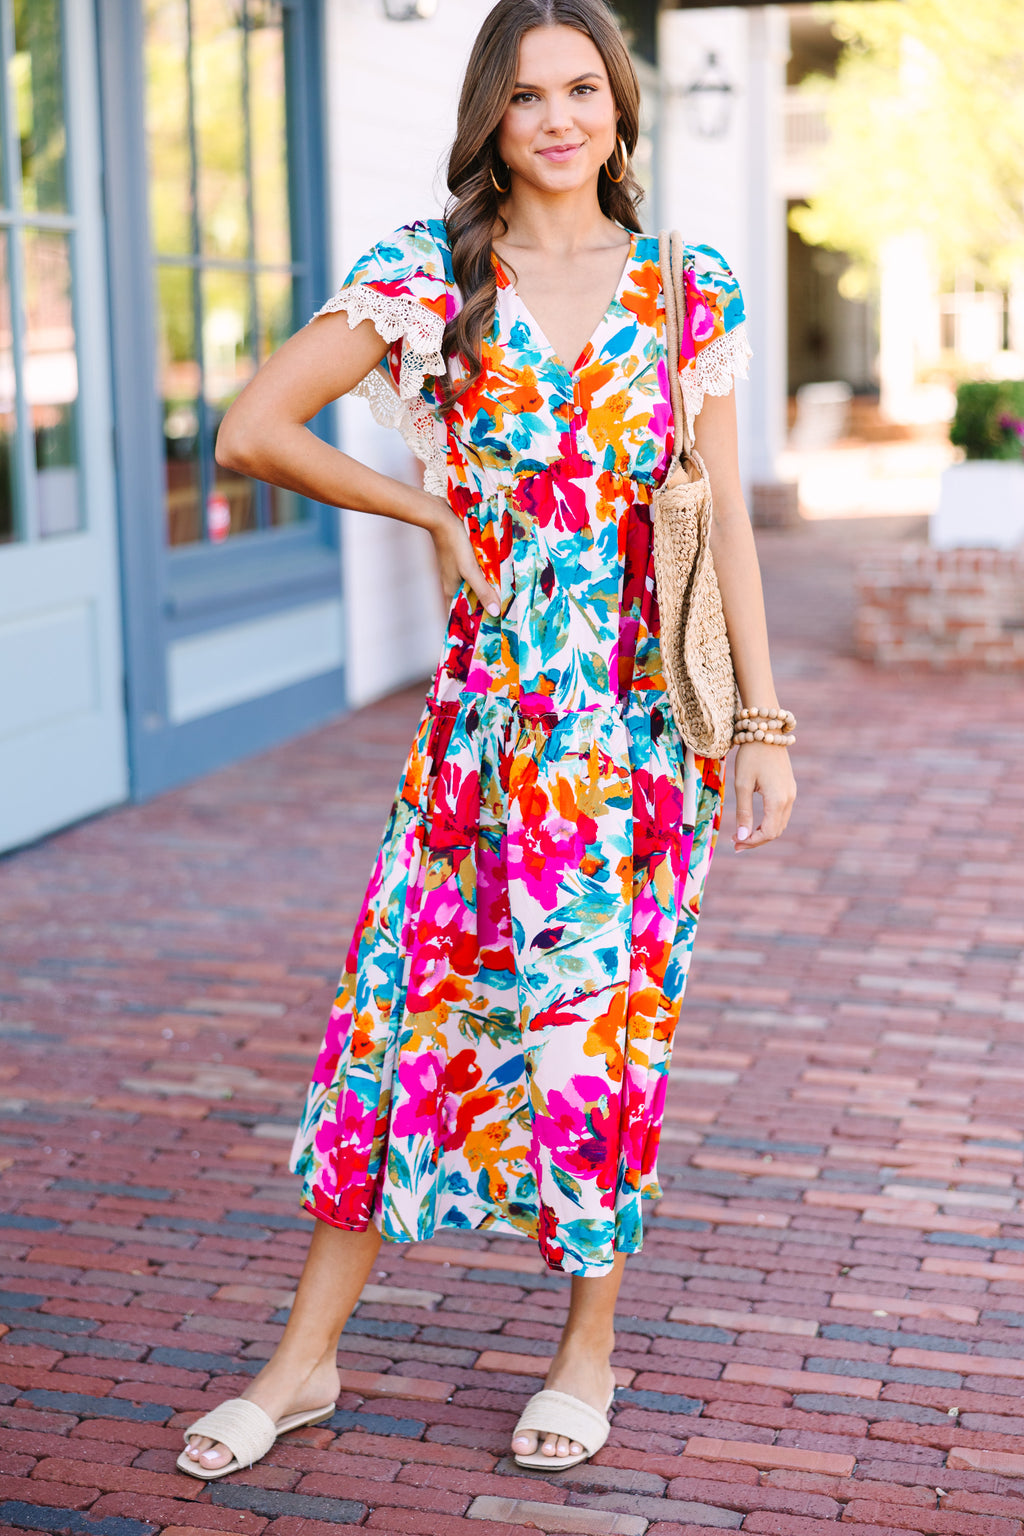 Women's dress, Floral print, Crochet detailing, Midi dress, Colorful fashion